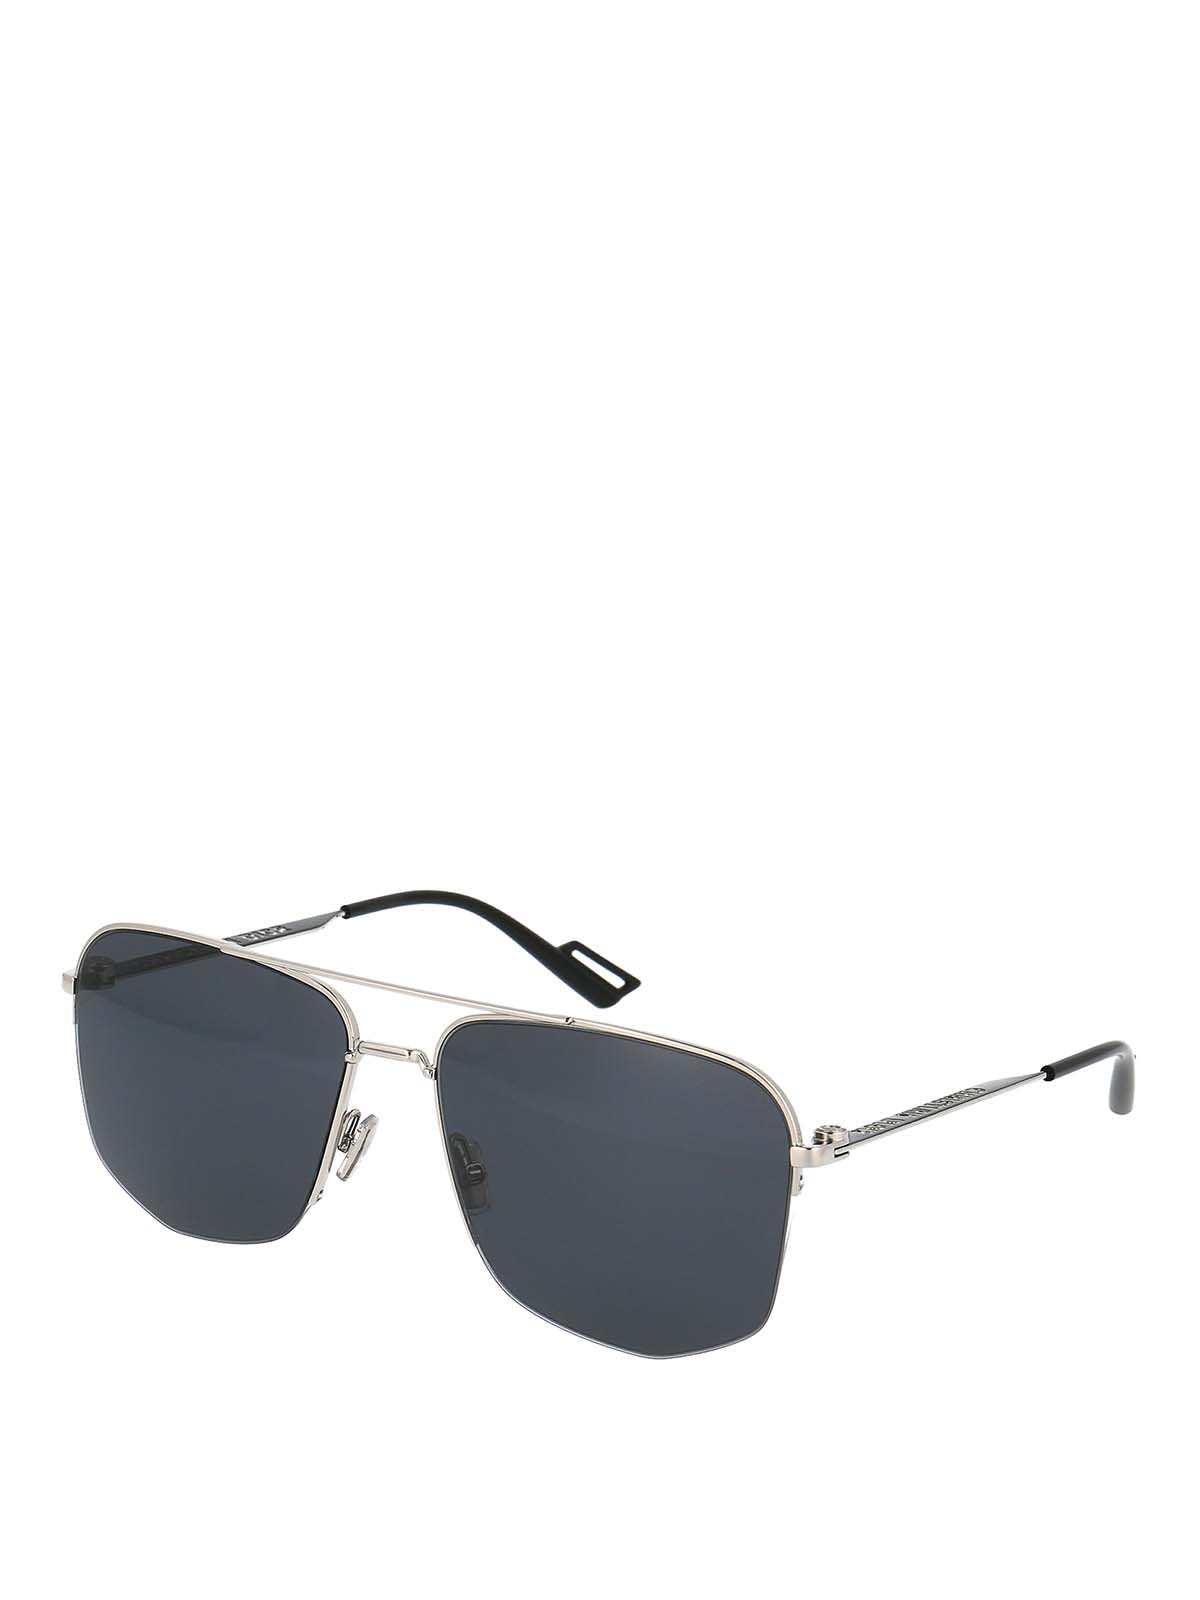 Sunglasses Dior - Titanium aviator sunglasses - DIOR18084JIR | iKRIX.com